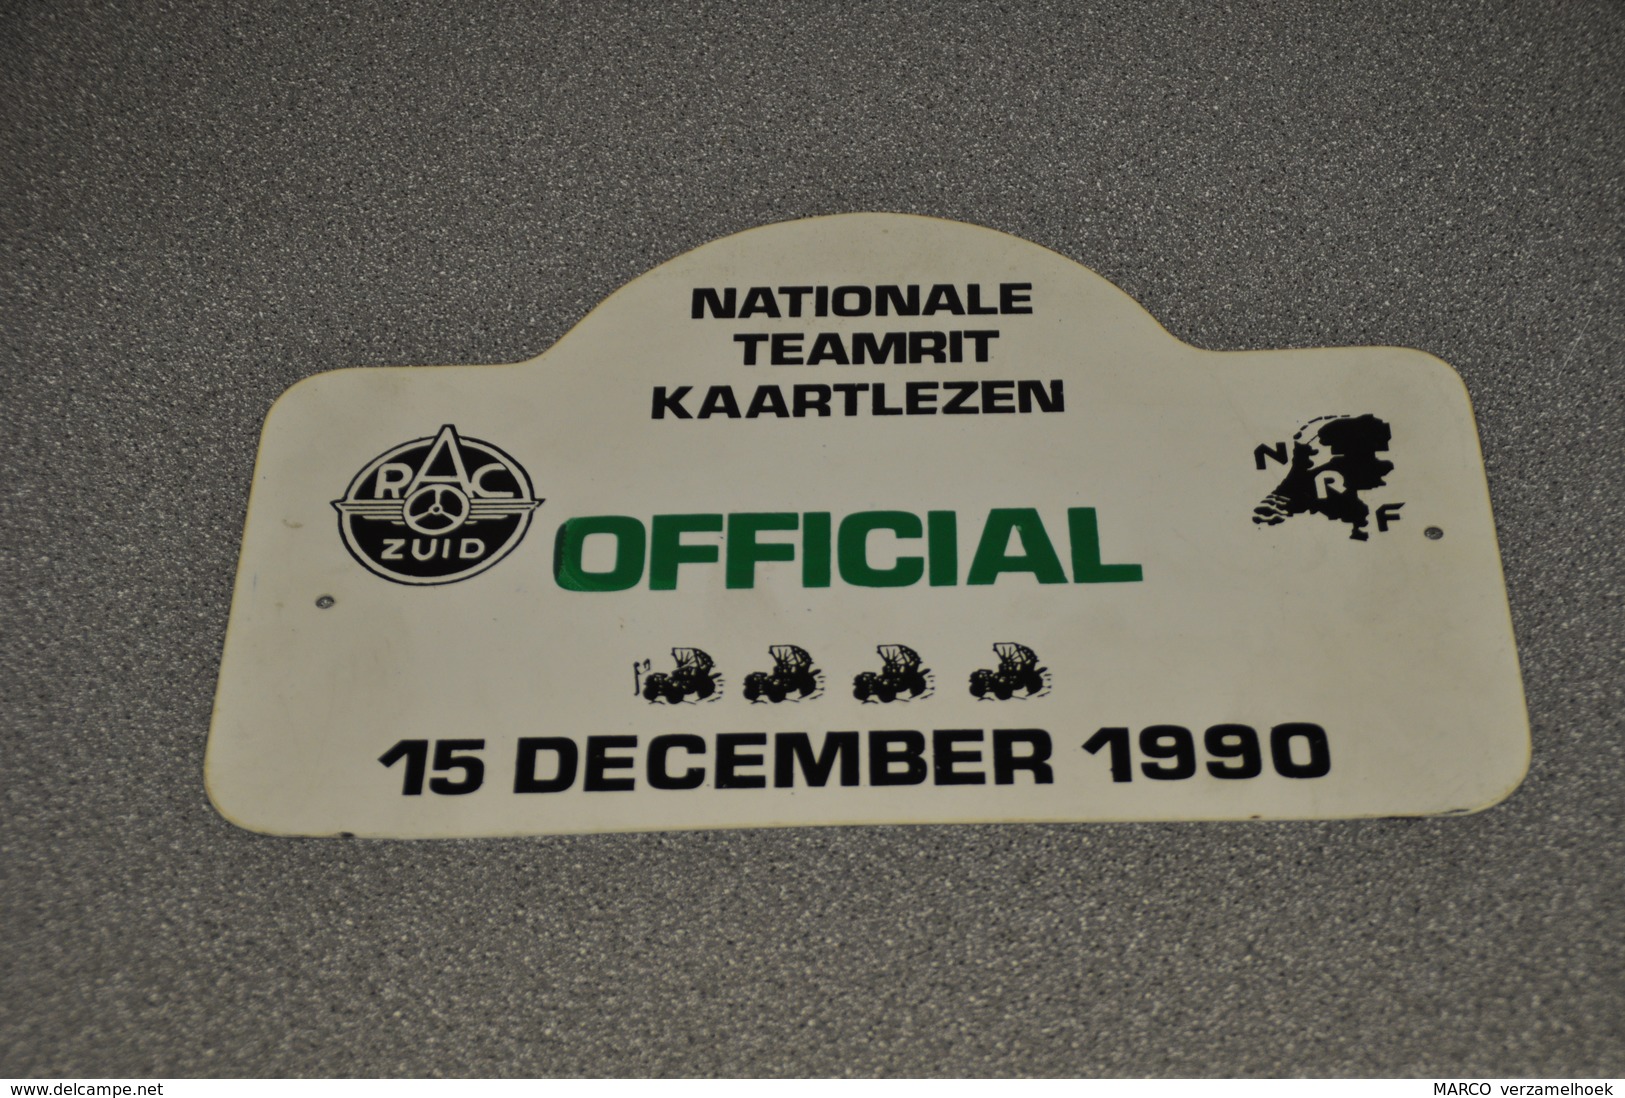 Rally Plaat-rallye Plaque Plastic: Nationale Teamrit Kaartlezen 1990 OFFICIAL RAC-zuid NRF - Rallye (Rally) Plates